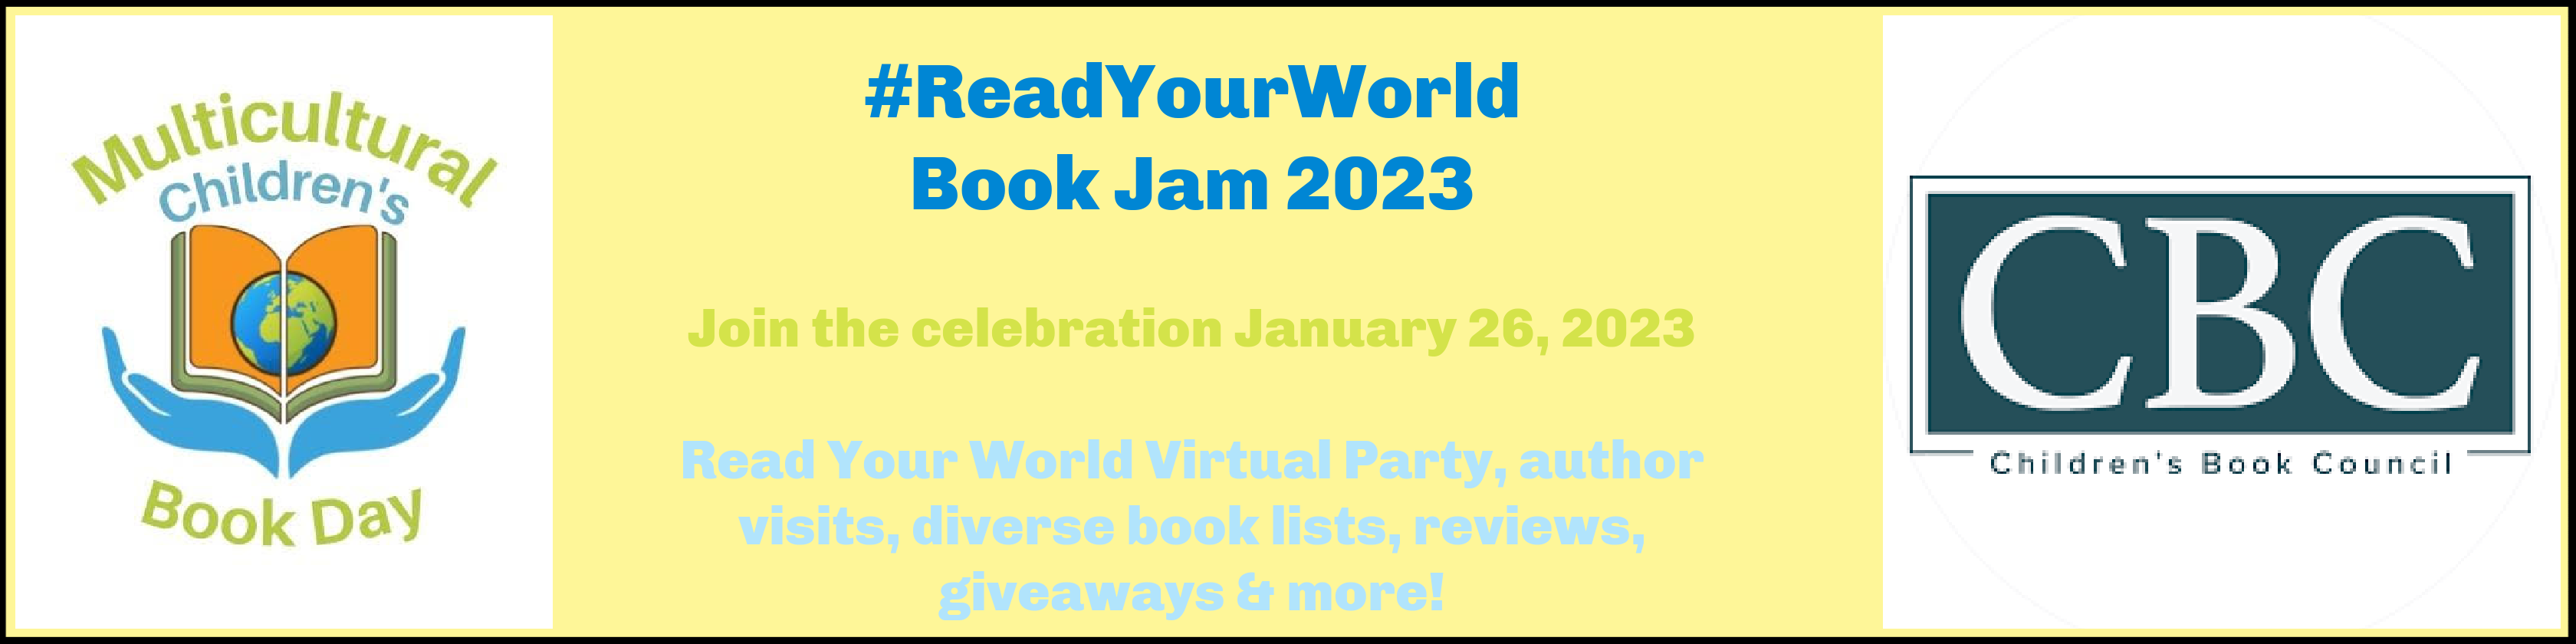 #ReadYourWorld Book Jam 2023